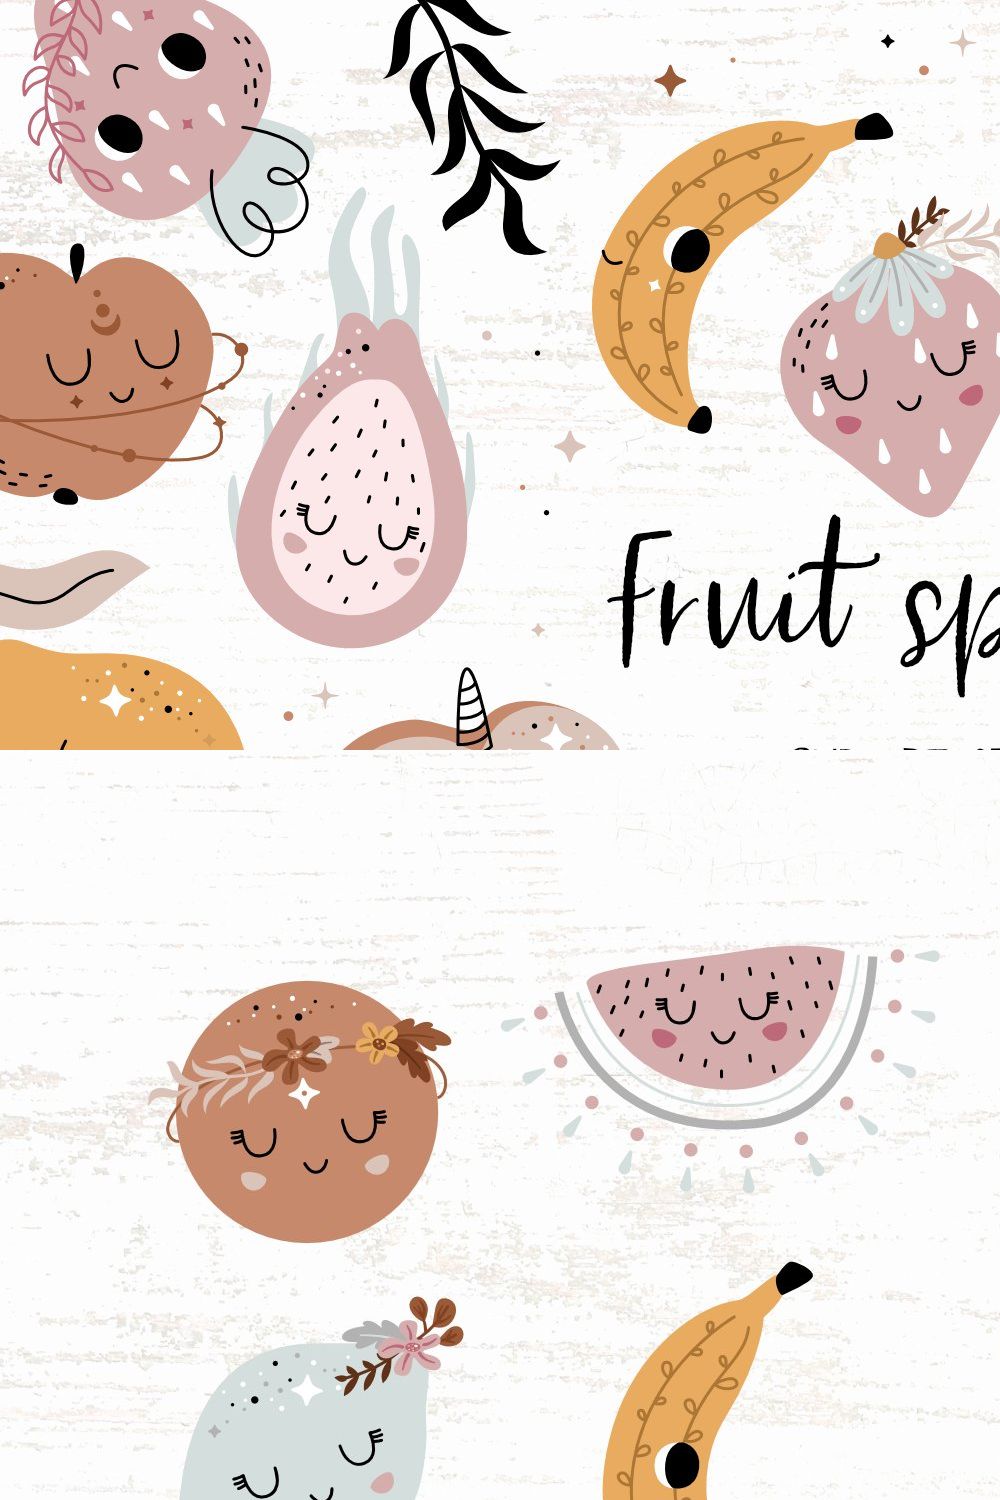 Fruit spirit - clip art set pinterest preview image.